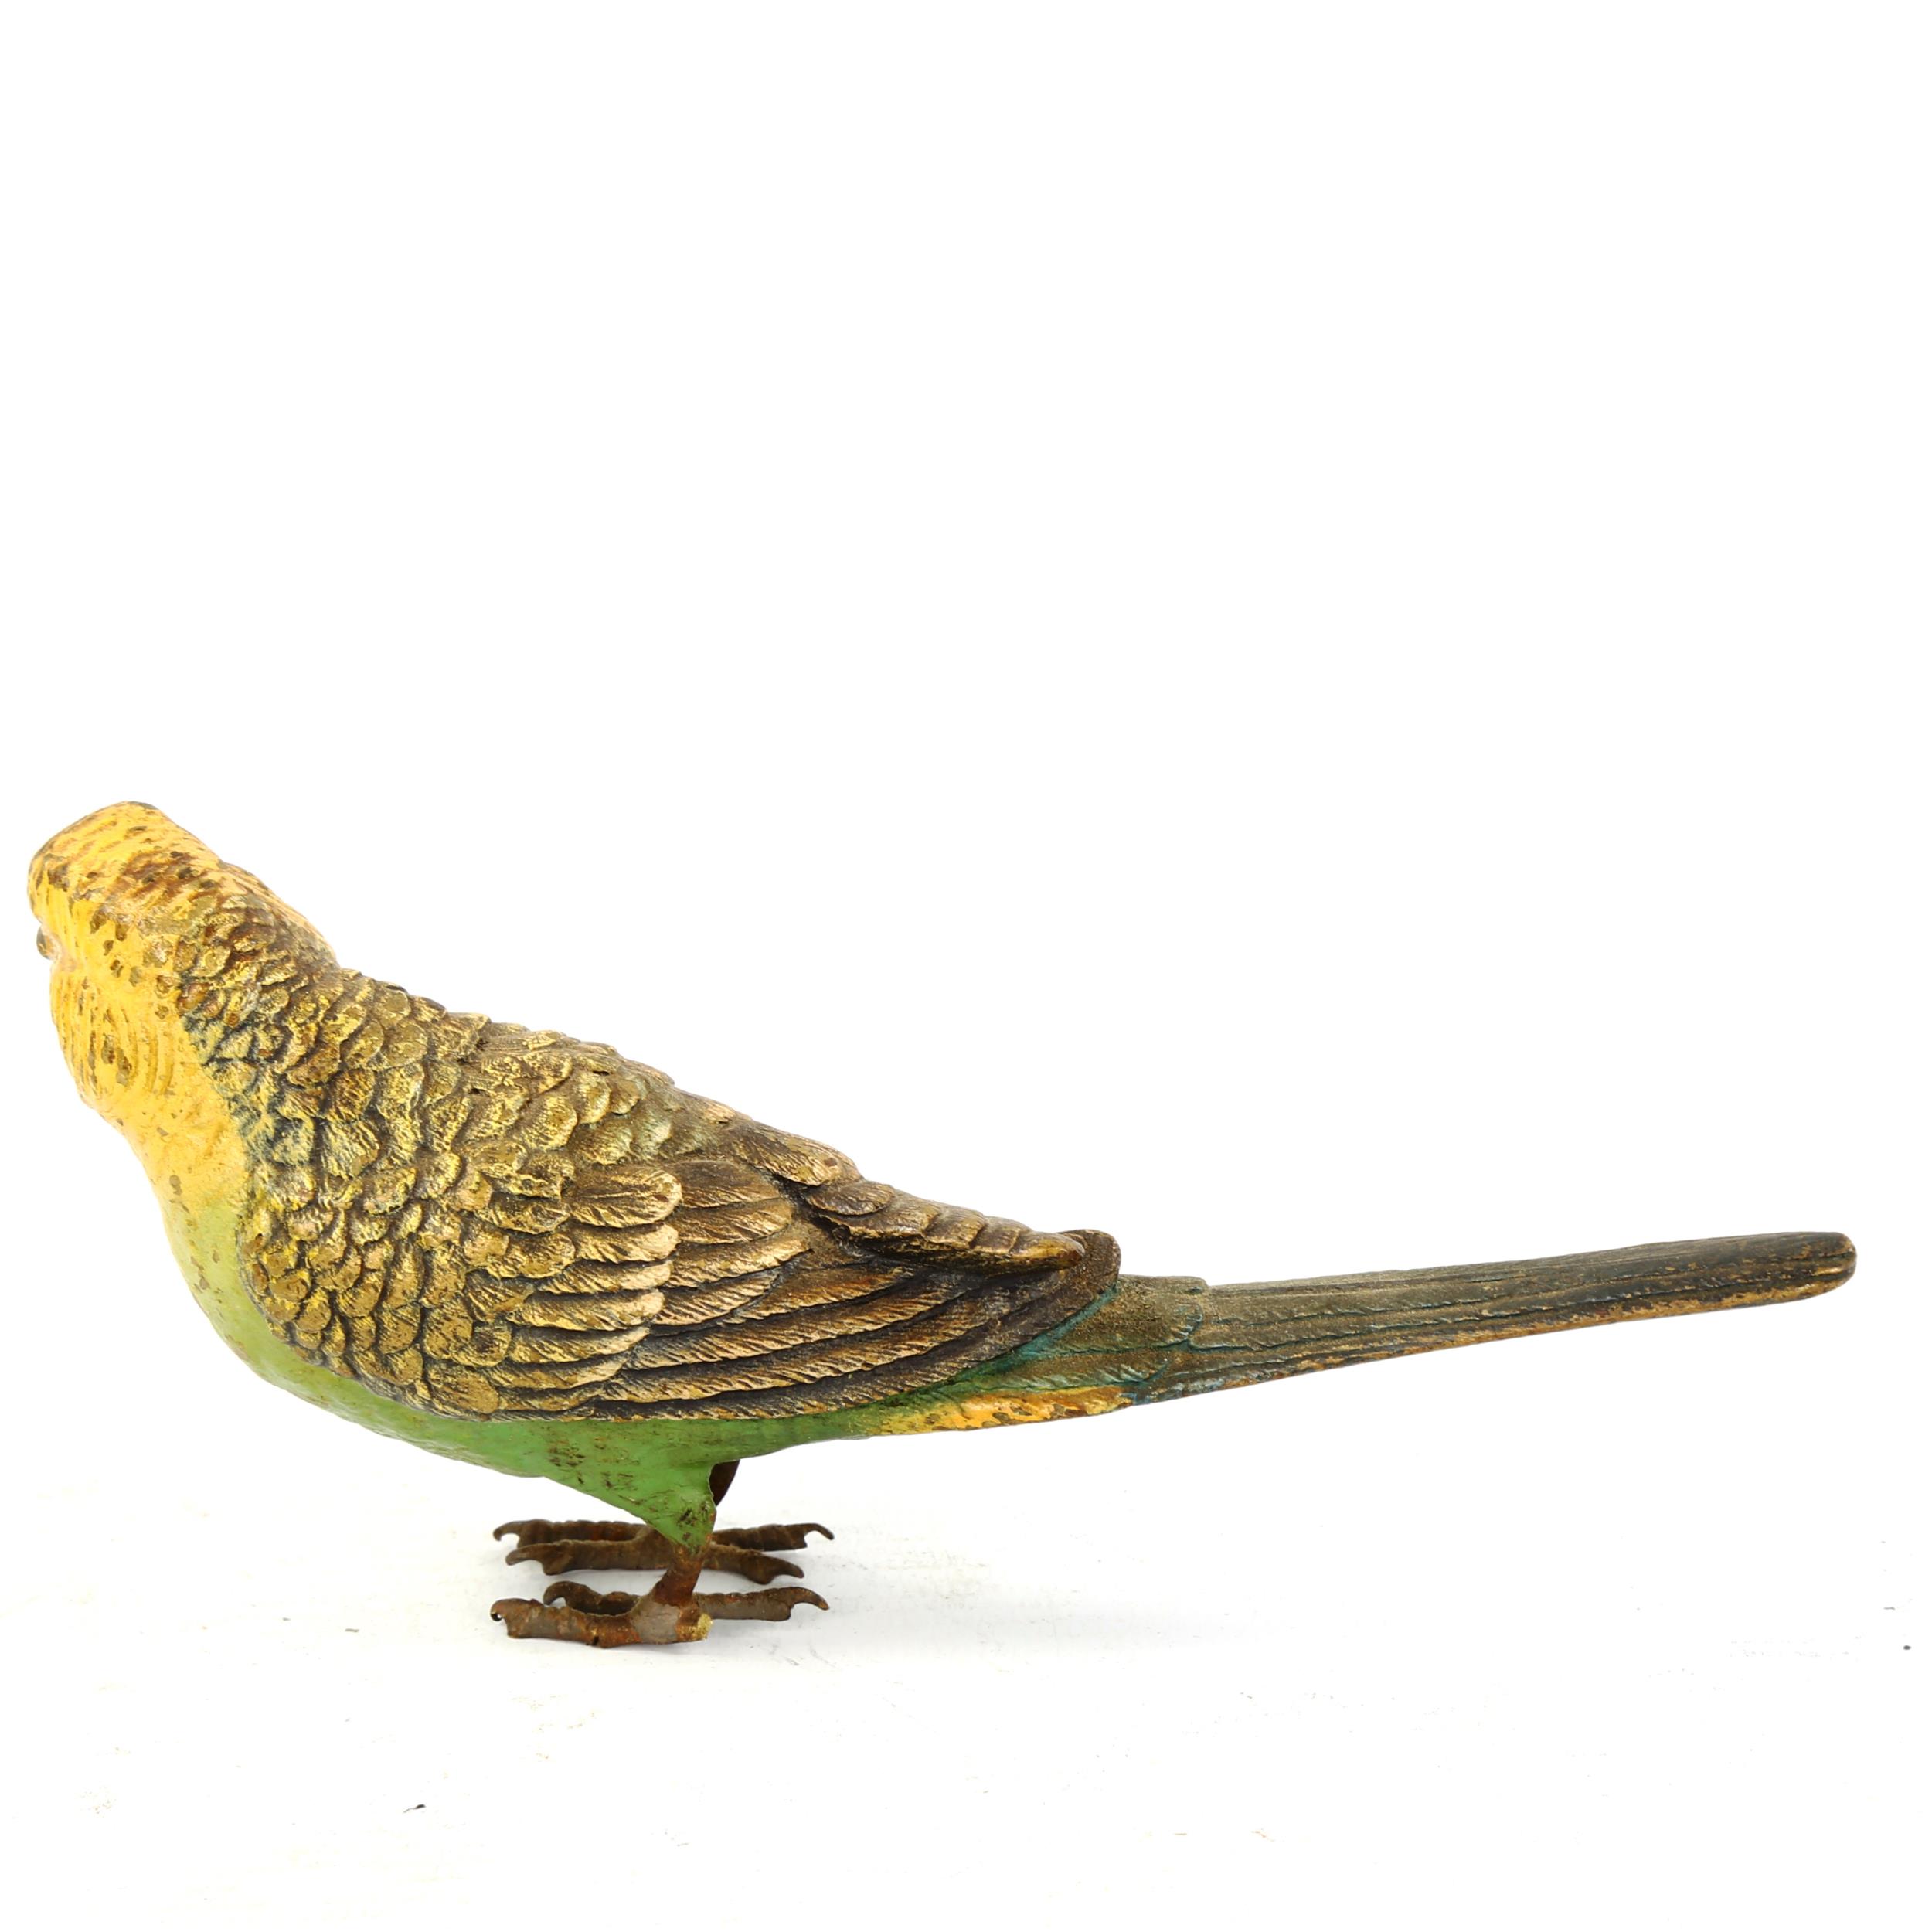 Austrian cold painted bronze parakeet, length 16cm - Image 2 of 3